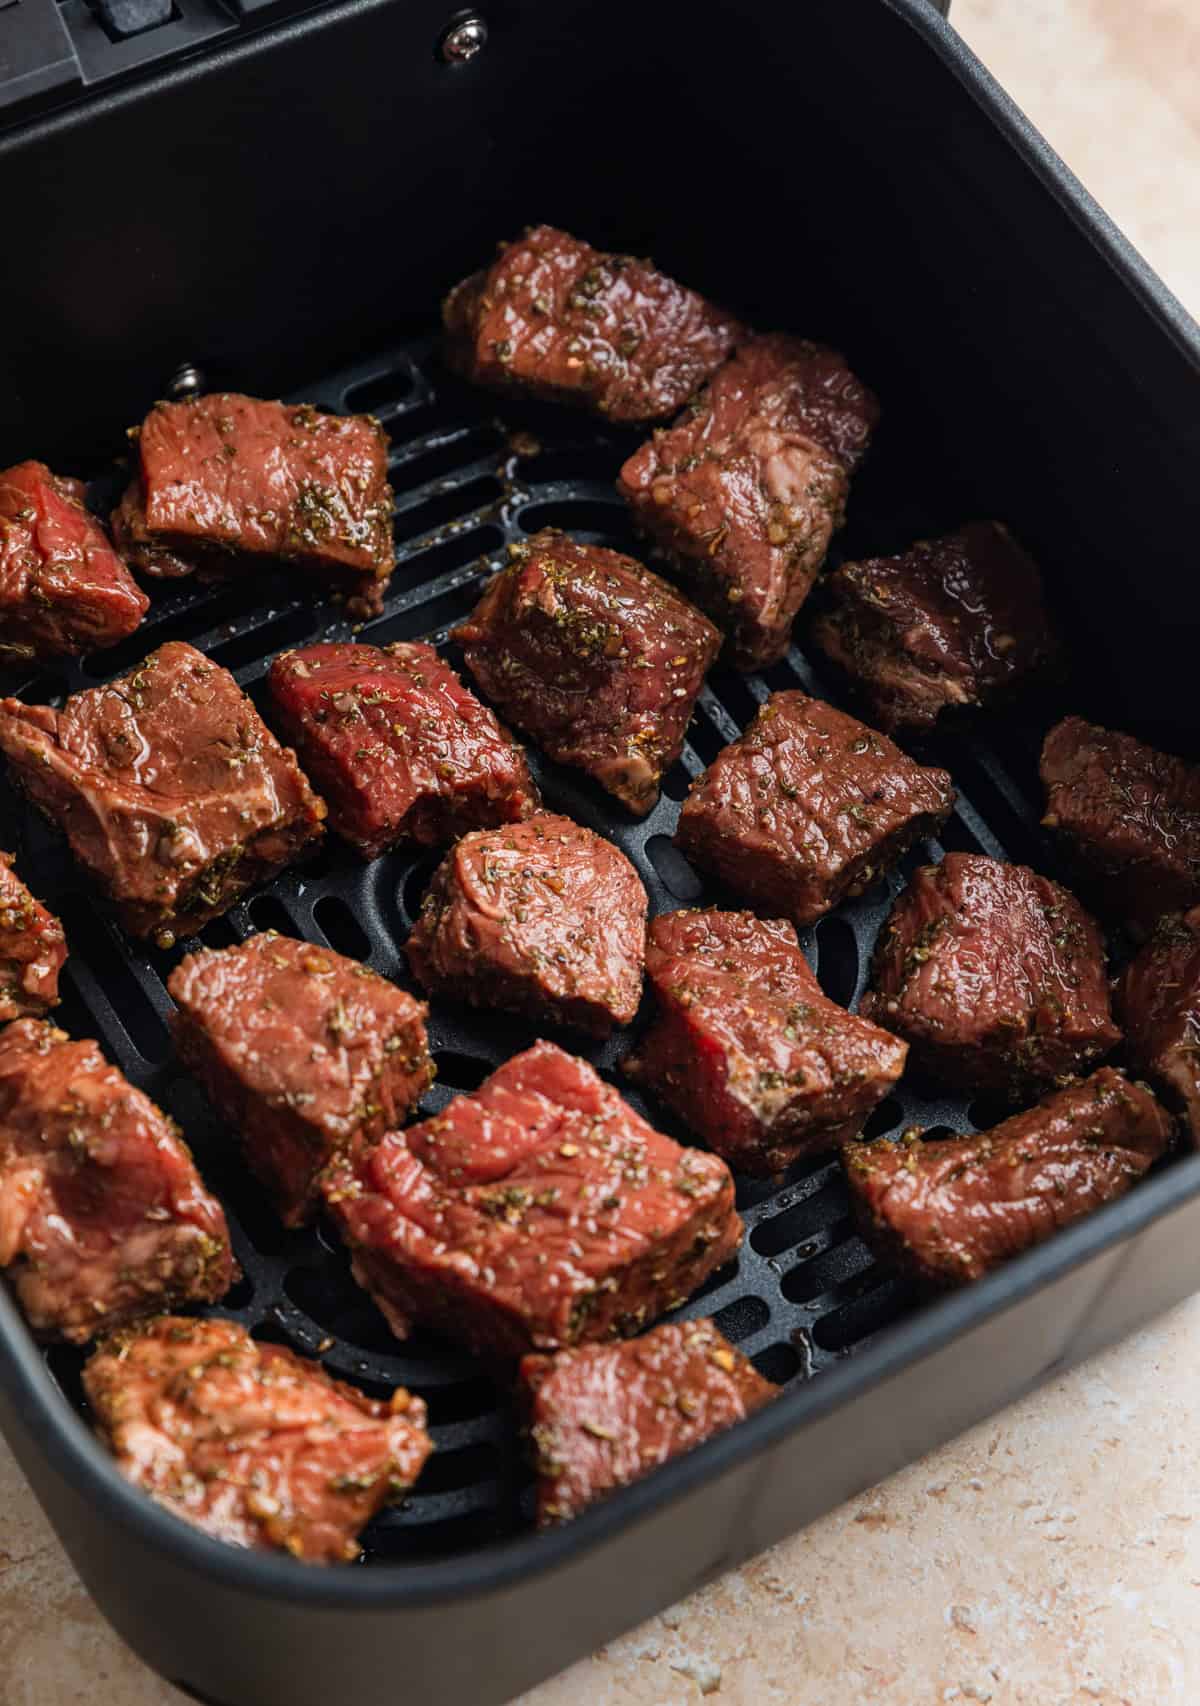 Marinaded sirloin steak bites in air fryer basket before cooking.